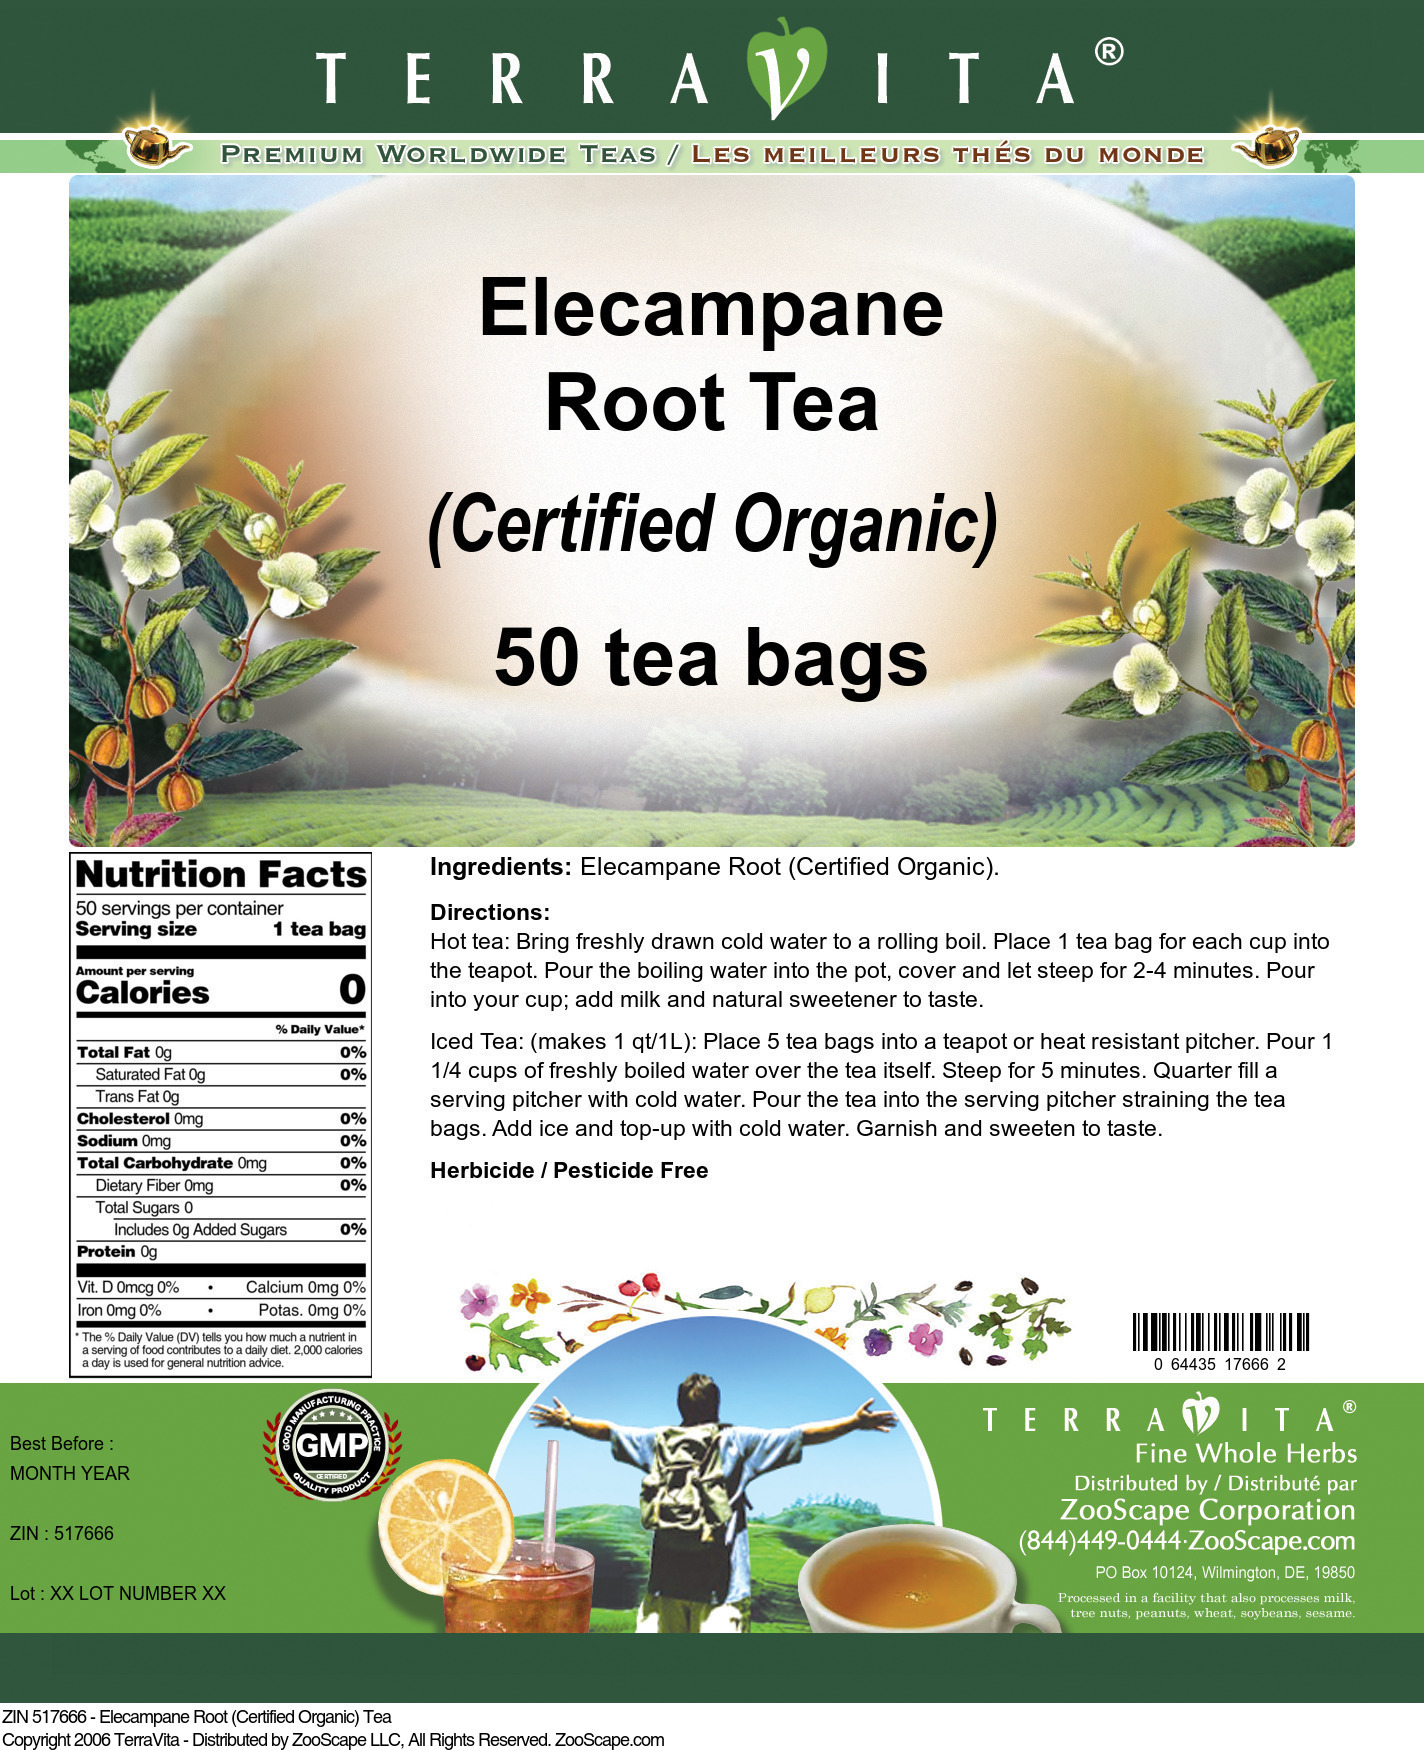 Elecampane Root (Certified Organic) Tea - Label